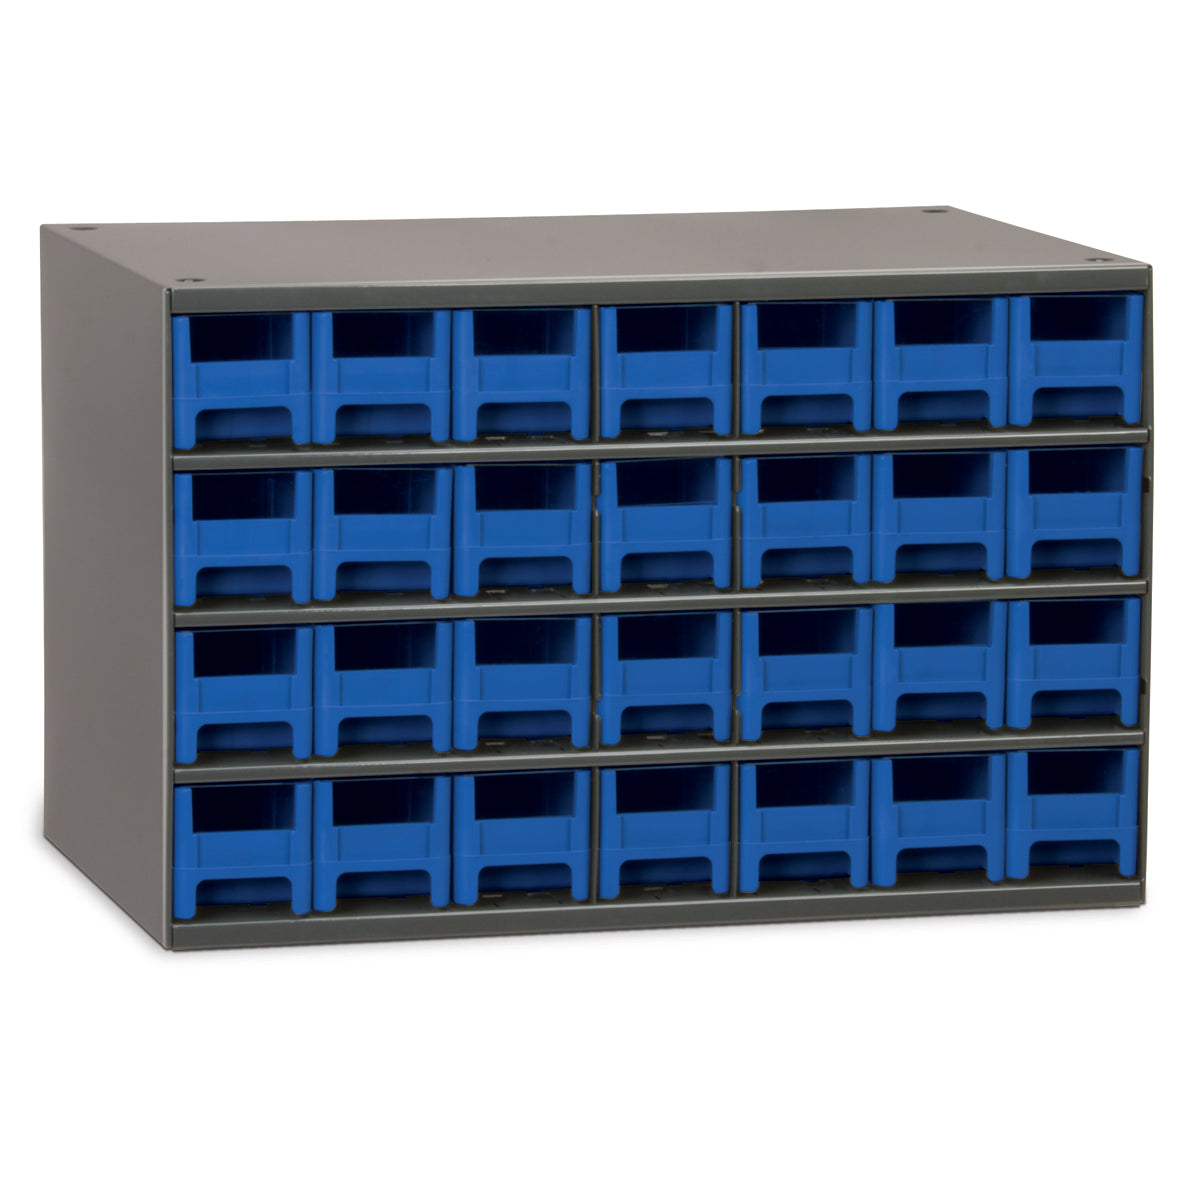 Organize with Akro-Mils Stacking Storage Bins